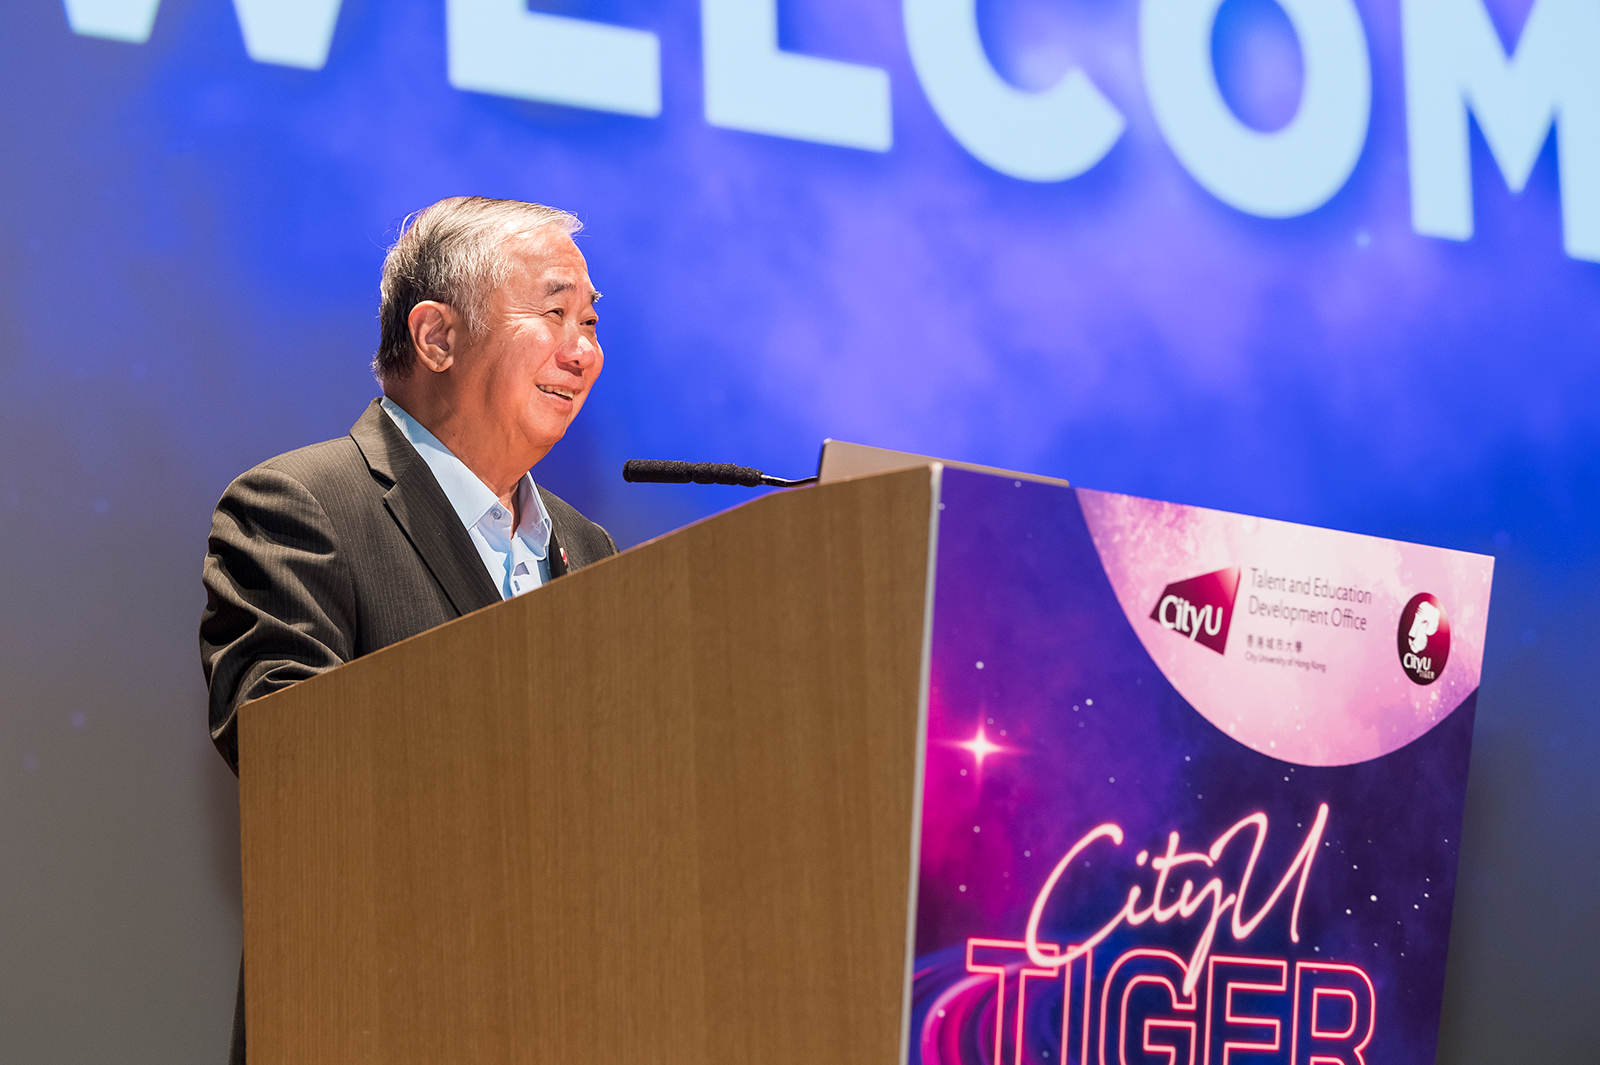 President Freddy Boey Yin Chiang congratulates the new CityU Tigers.